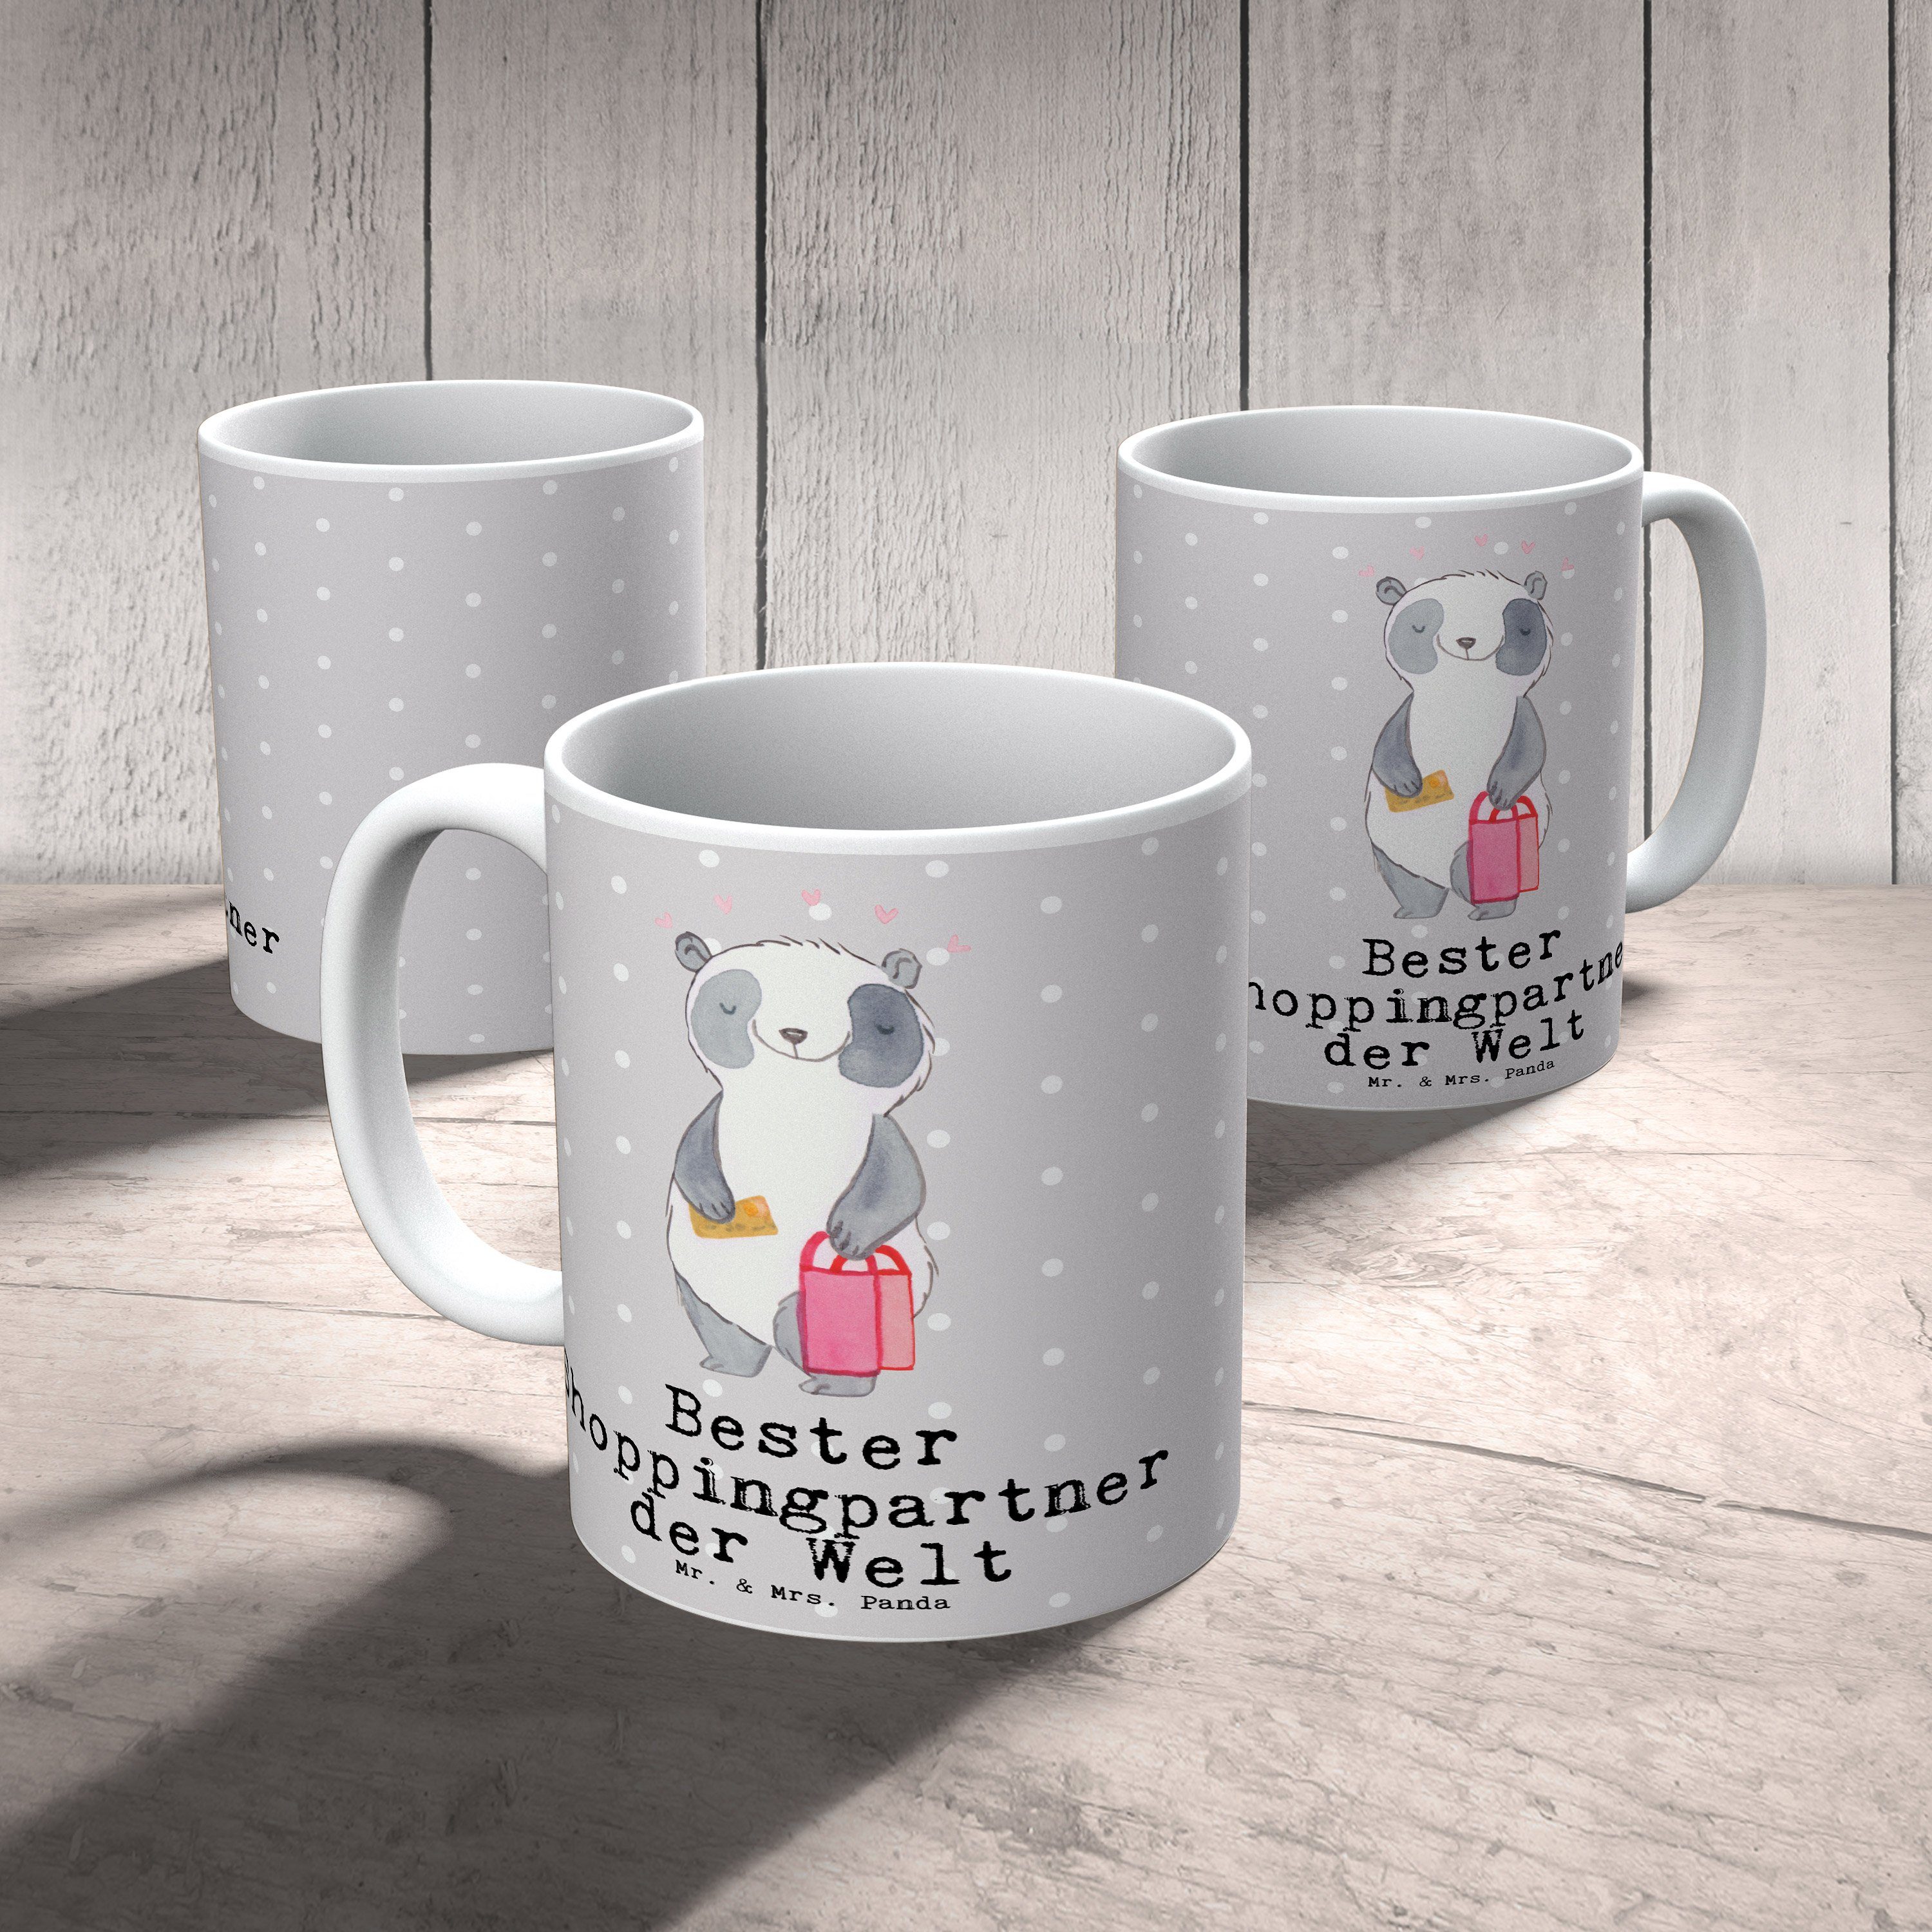 - Welt der Bester Pastell - & Panda Panda Mrs. Grau Shoppingpartner Geschenk, Keramik Mitb, Mr. Tasse